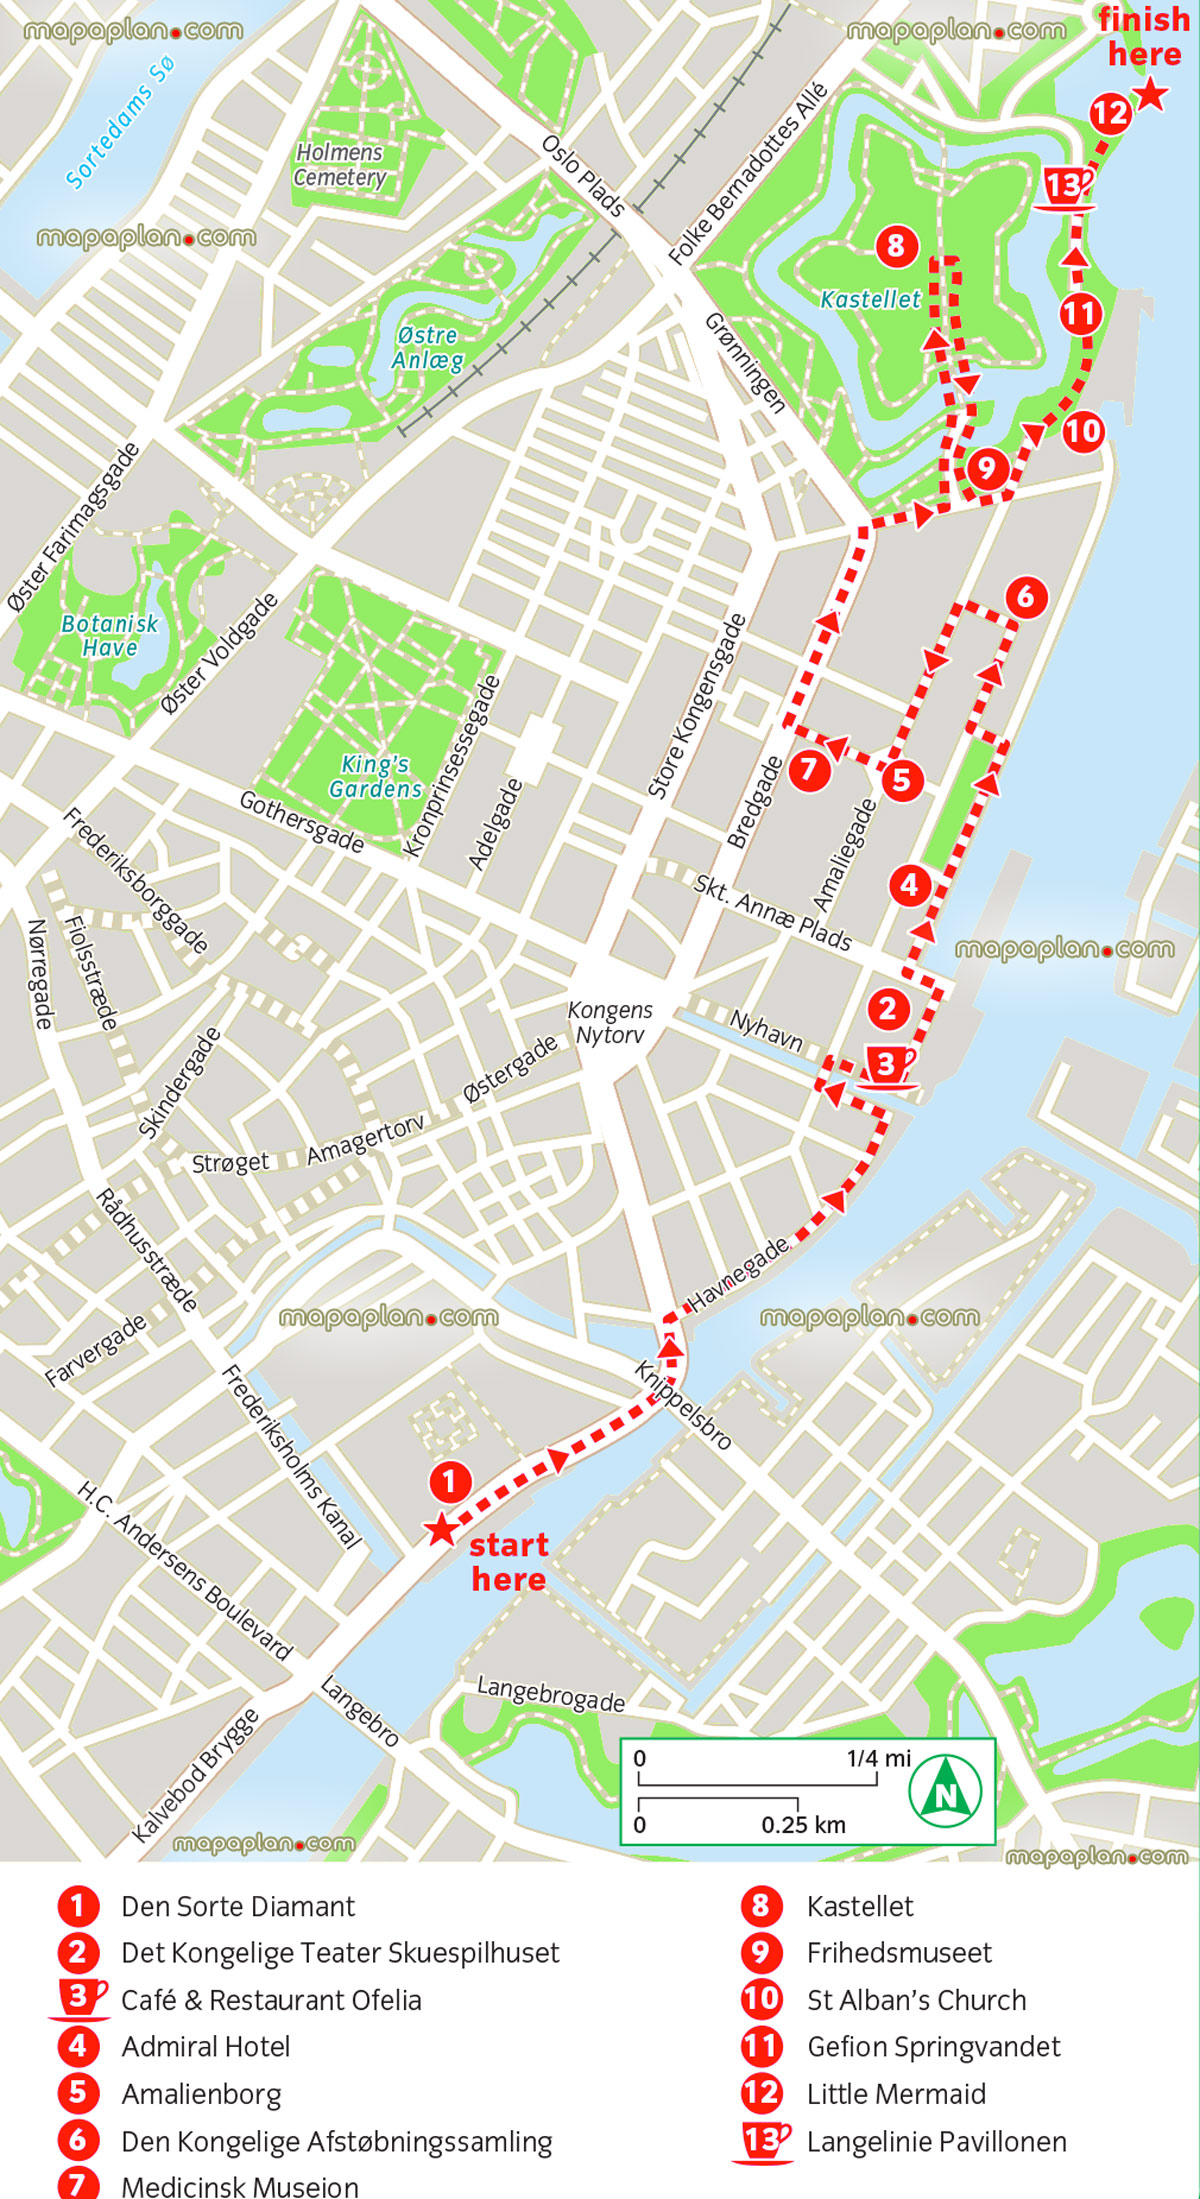 waterfront walk free printable virtual explorer plan places visits Copenhagen Top tourist attractions map